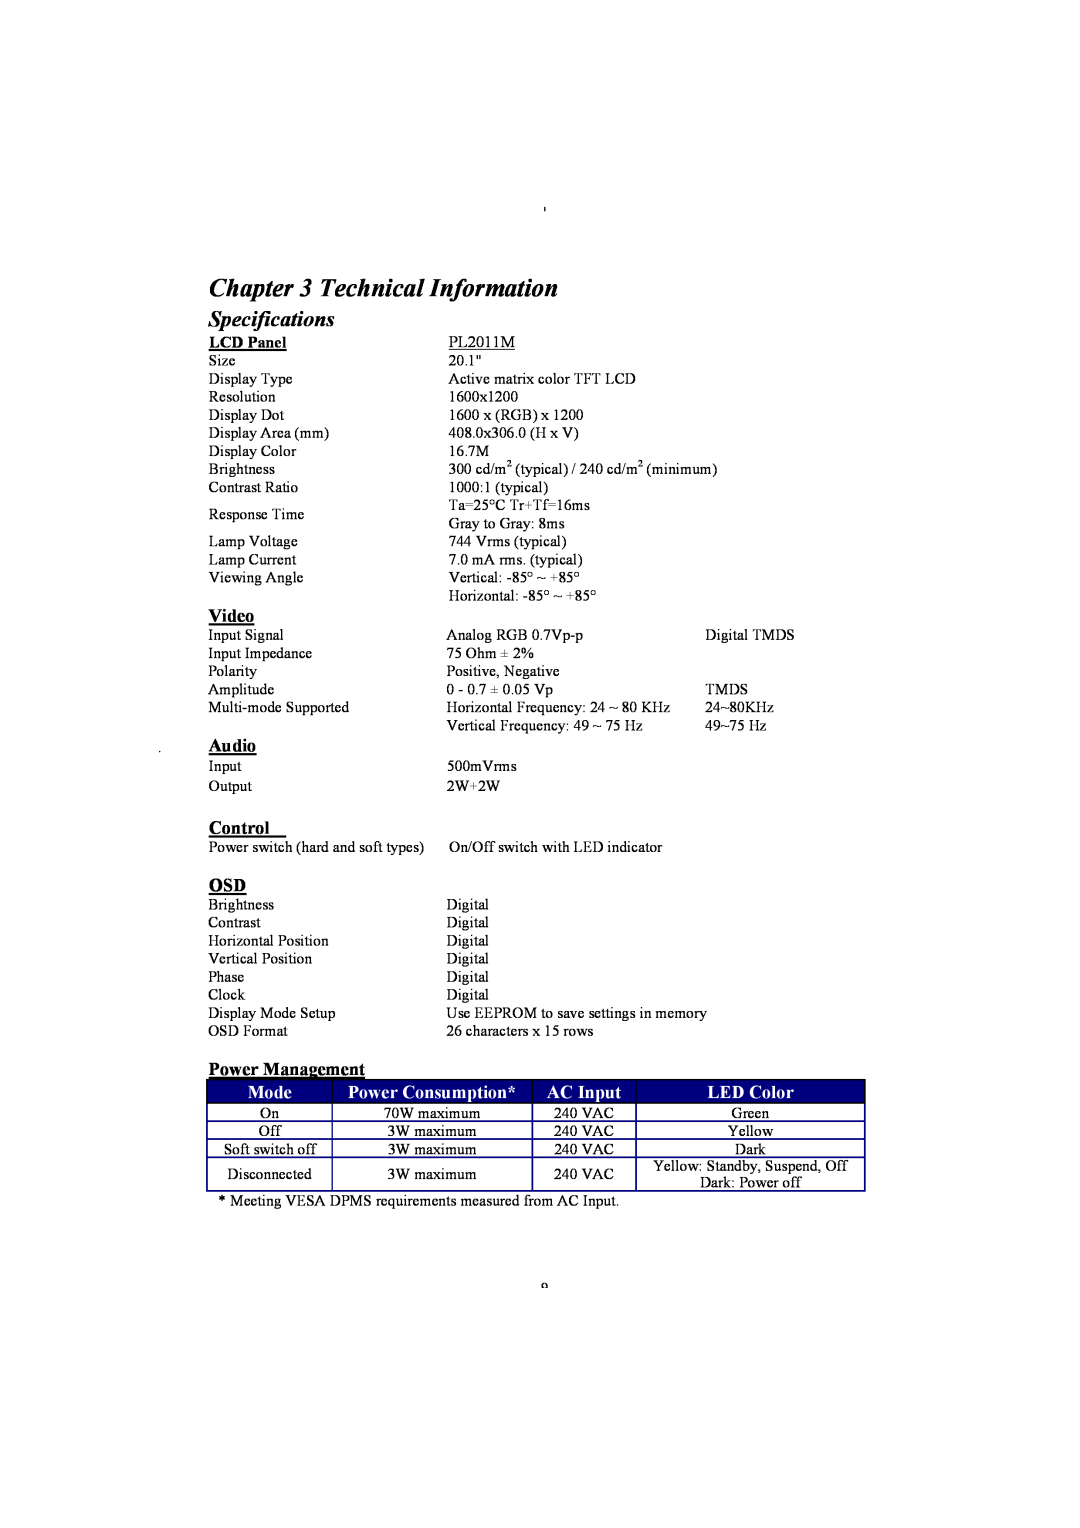 Planar PL2011 manual Specifications, Video, Audio, Control, Power Management, Mode, Power Consumption, AC Input, LED Color 